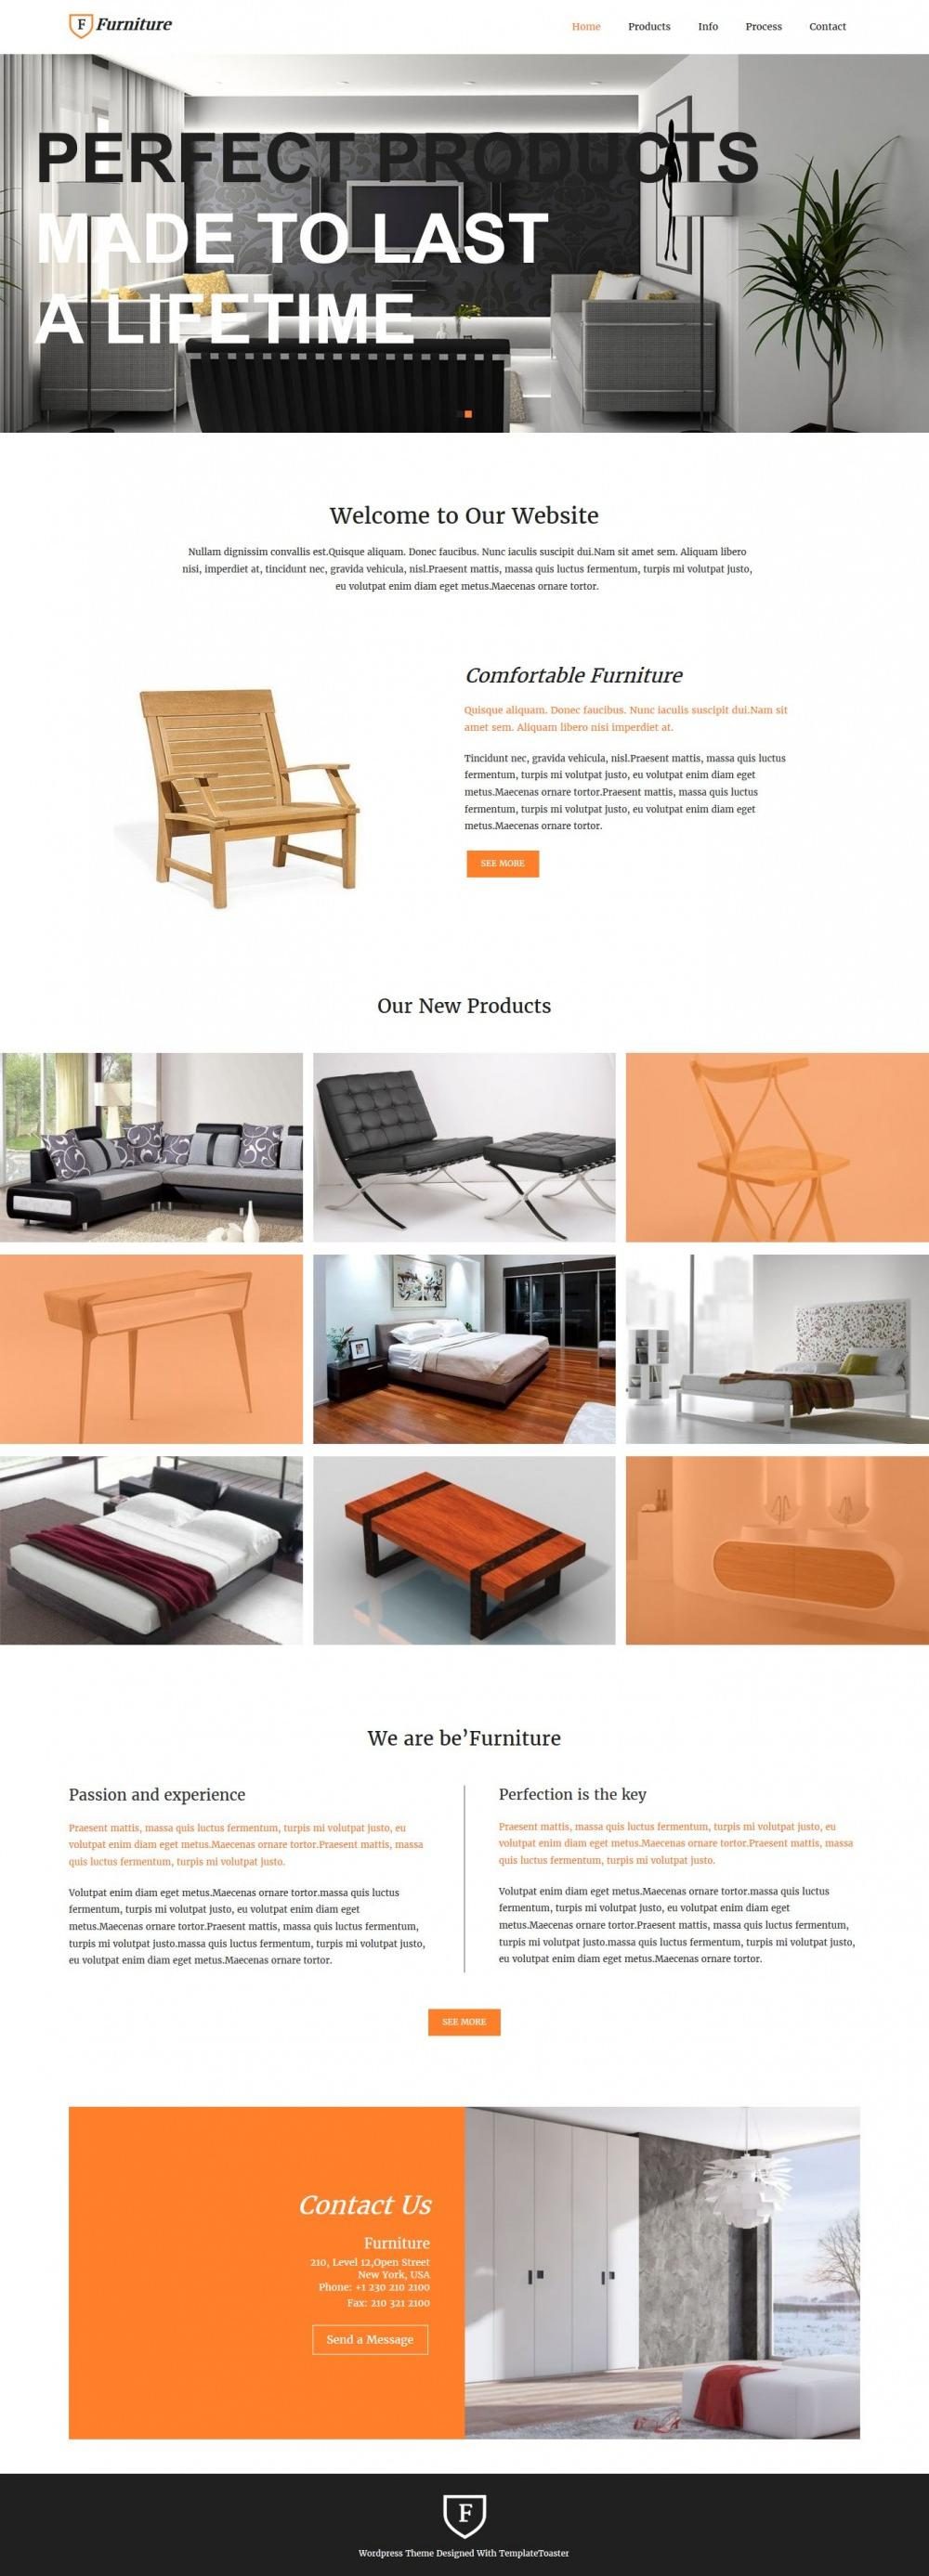 Furniture - WordPress theme for Furniture Enterprises